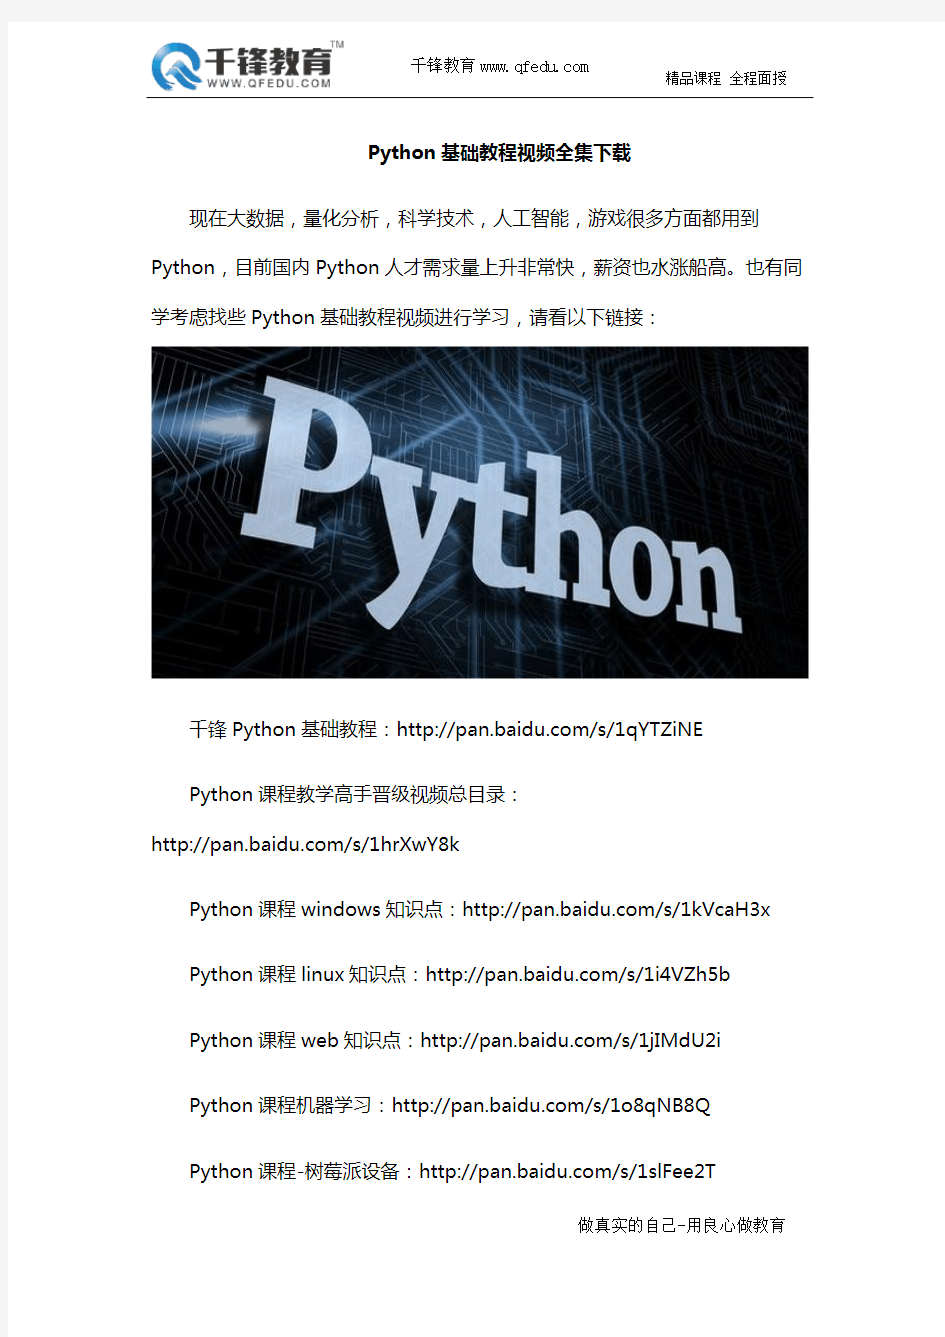 Python基础教程视频全集下载